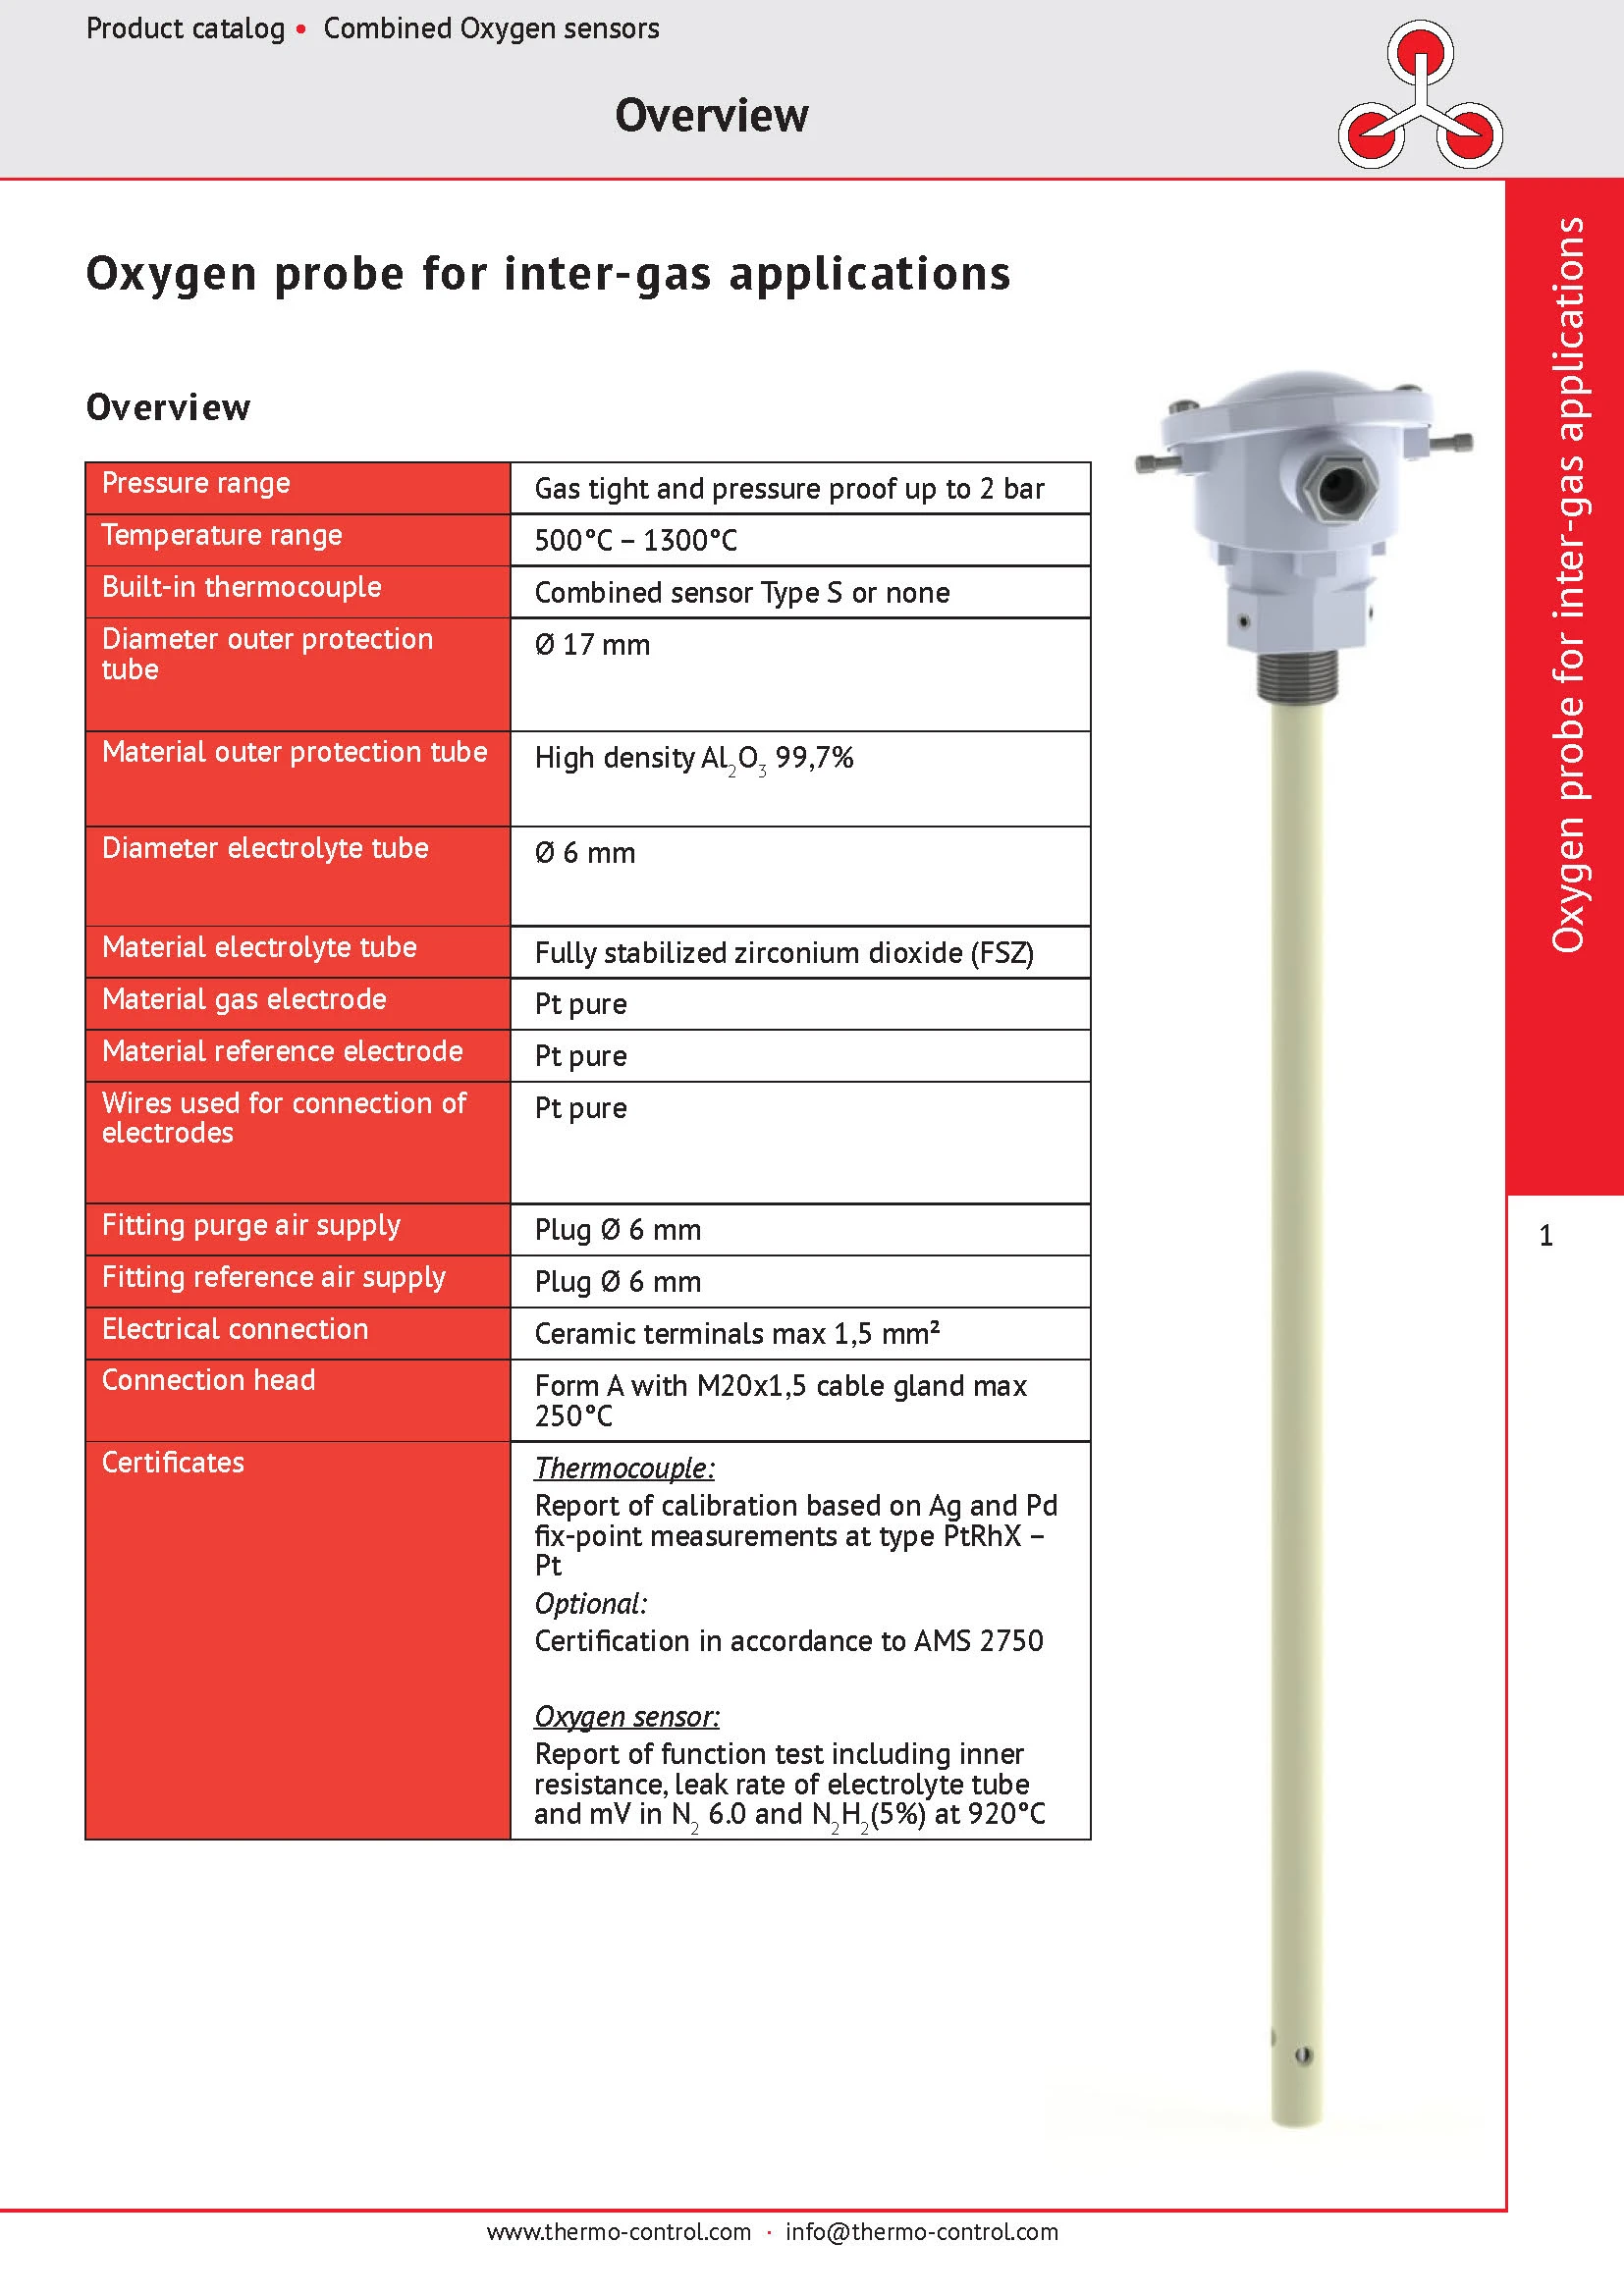 thermo-control Körtvélyessy - Catalog for inert gas oxygen probes